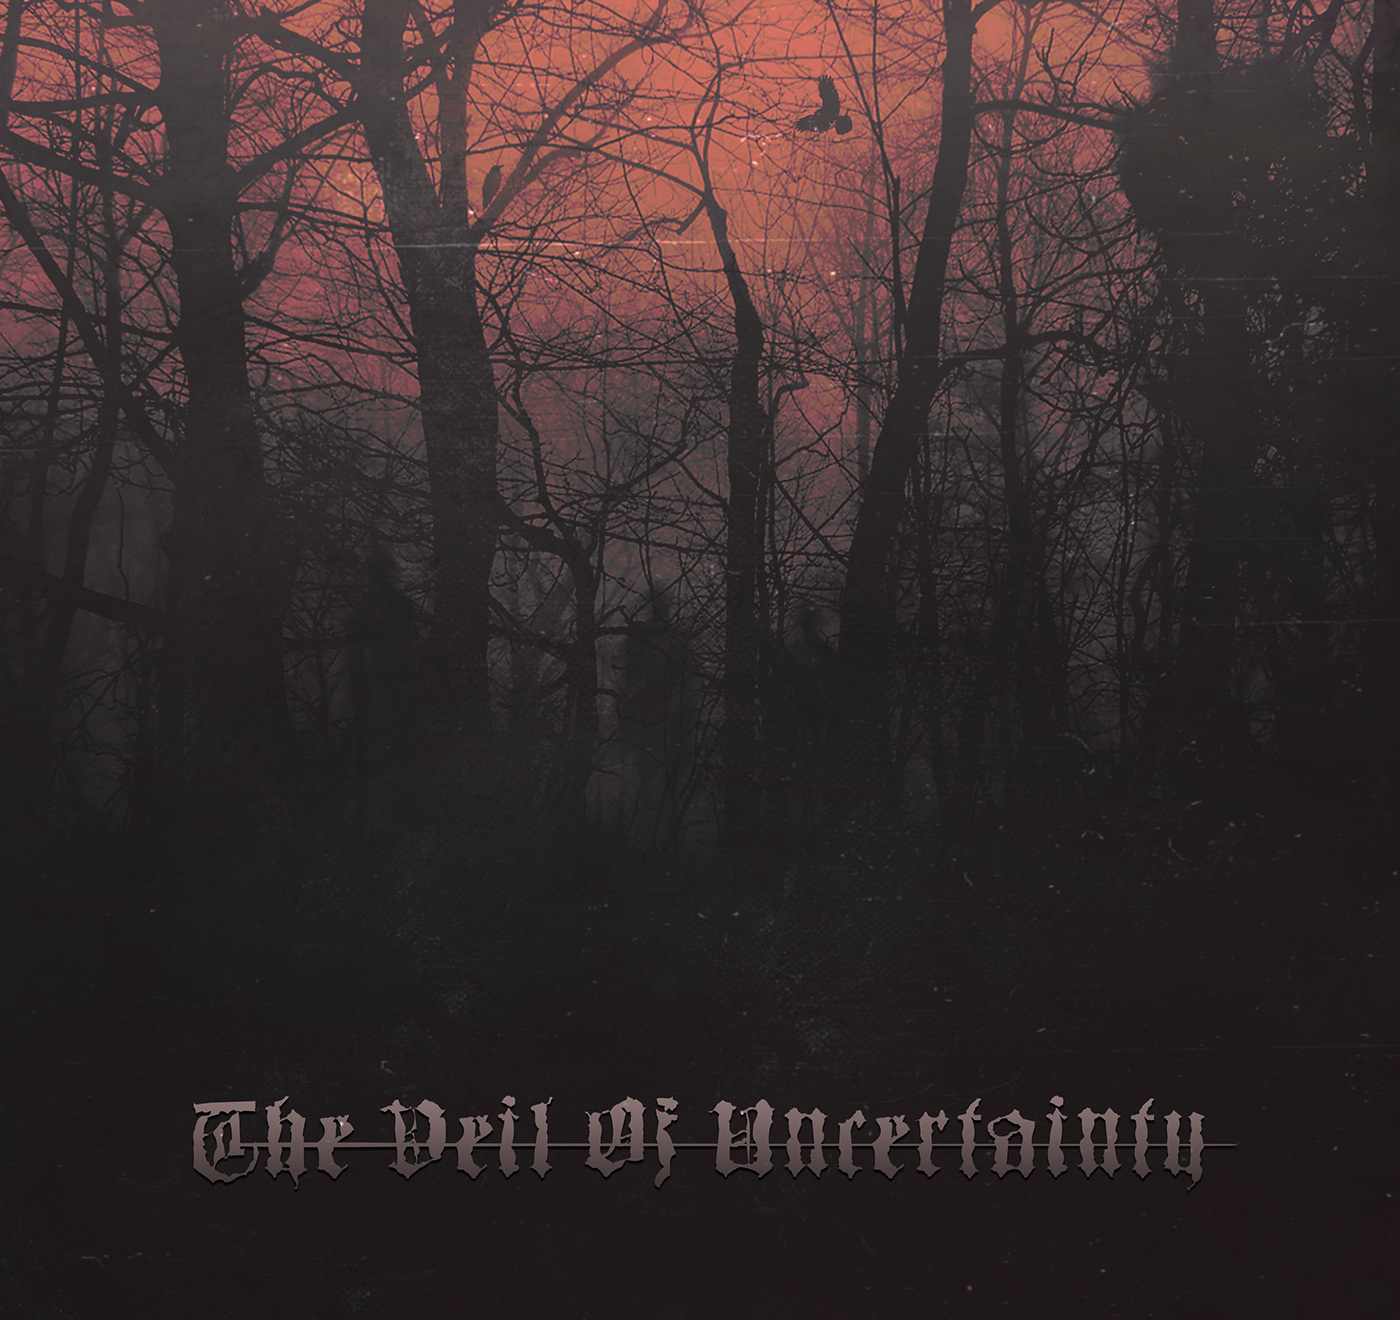 art artwork cover death metal deathcore Deathmetal metal music